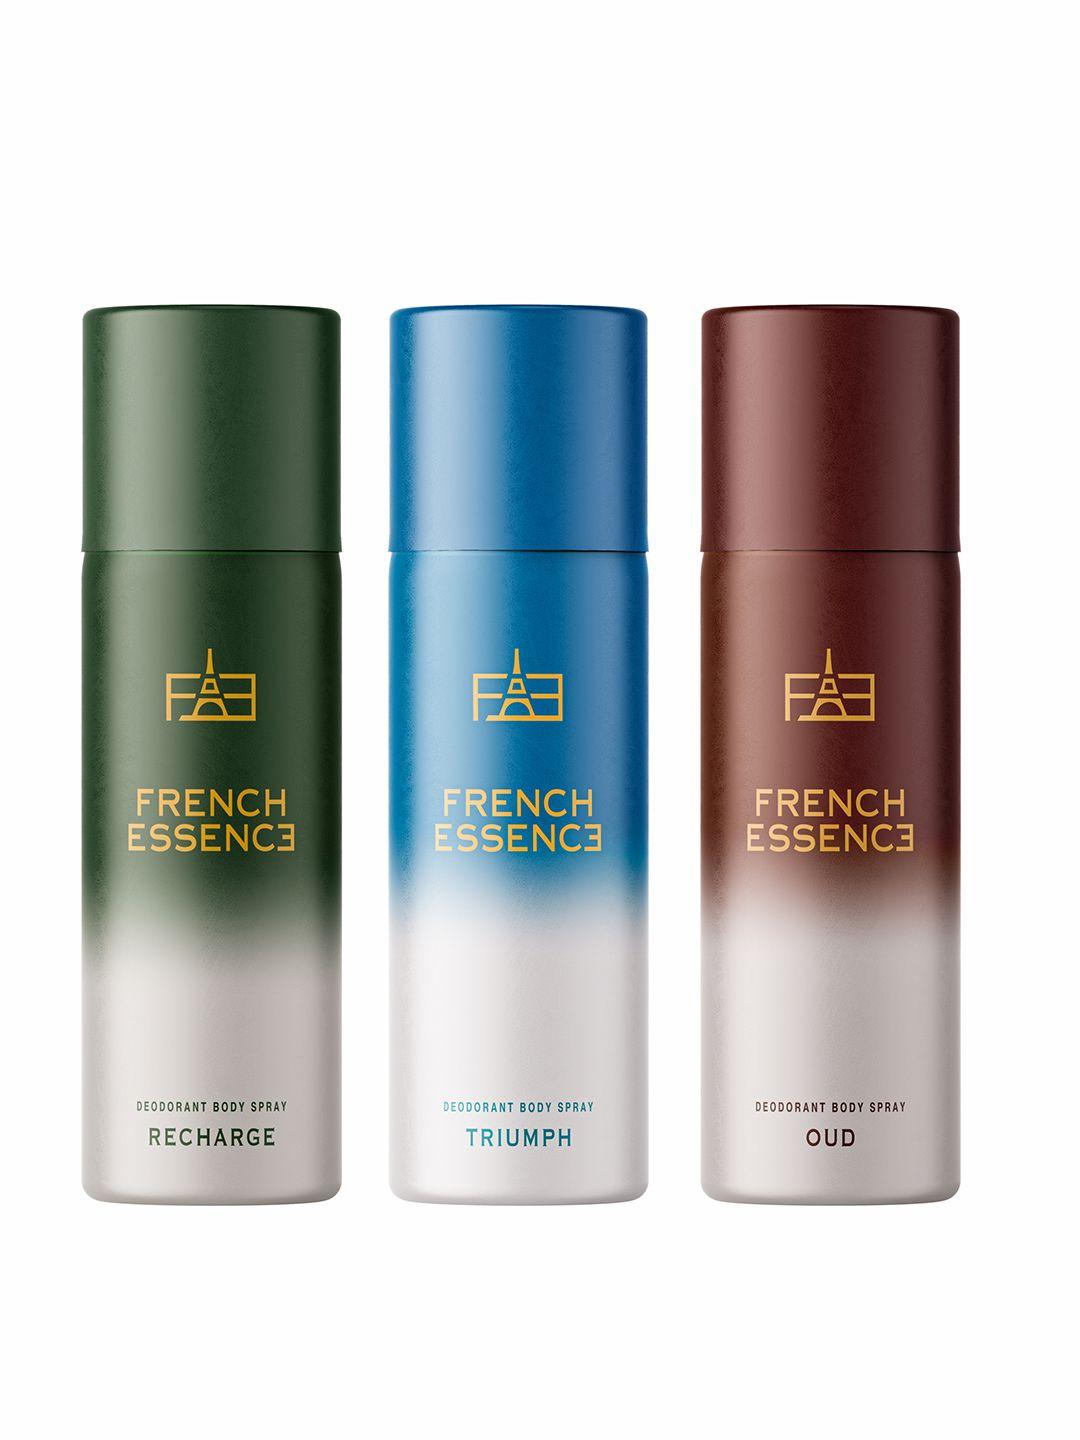 french essence set of 3 deodorant body sprays 50 ml each -triumph + oud + recharge